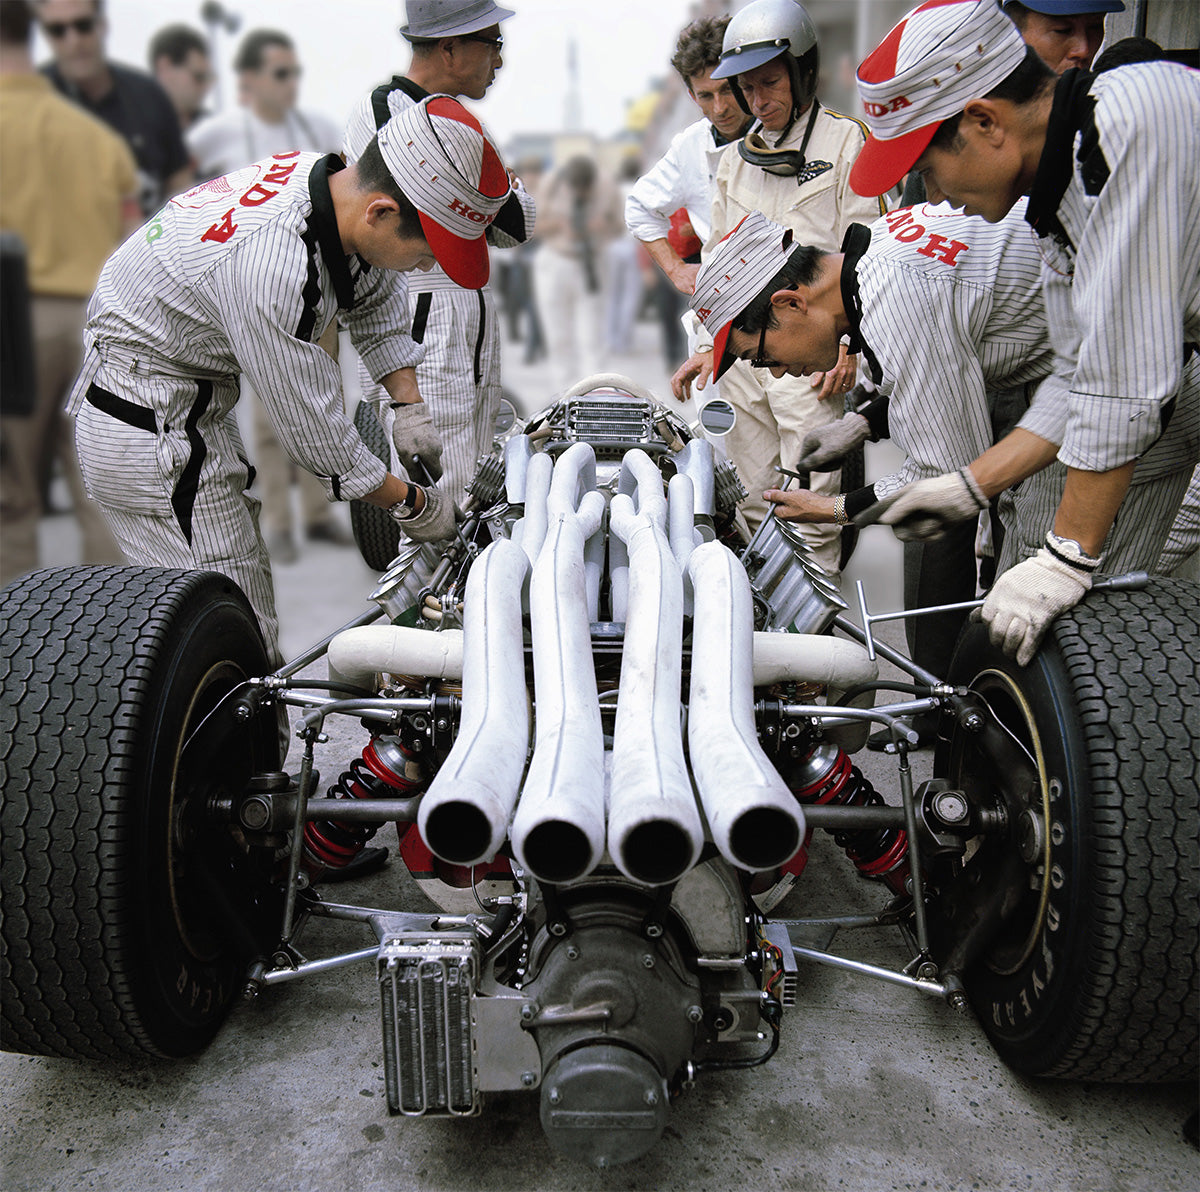 1966 Honda Racing Replica Mechanics Hat